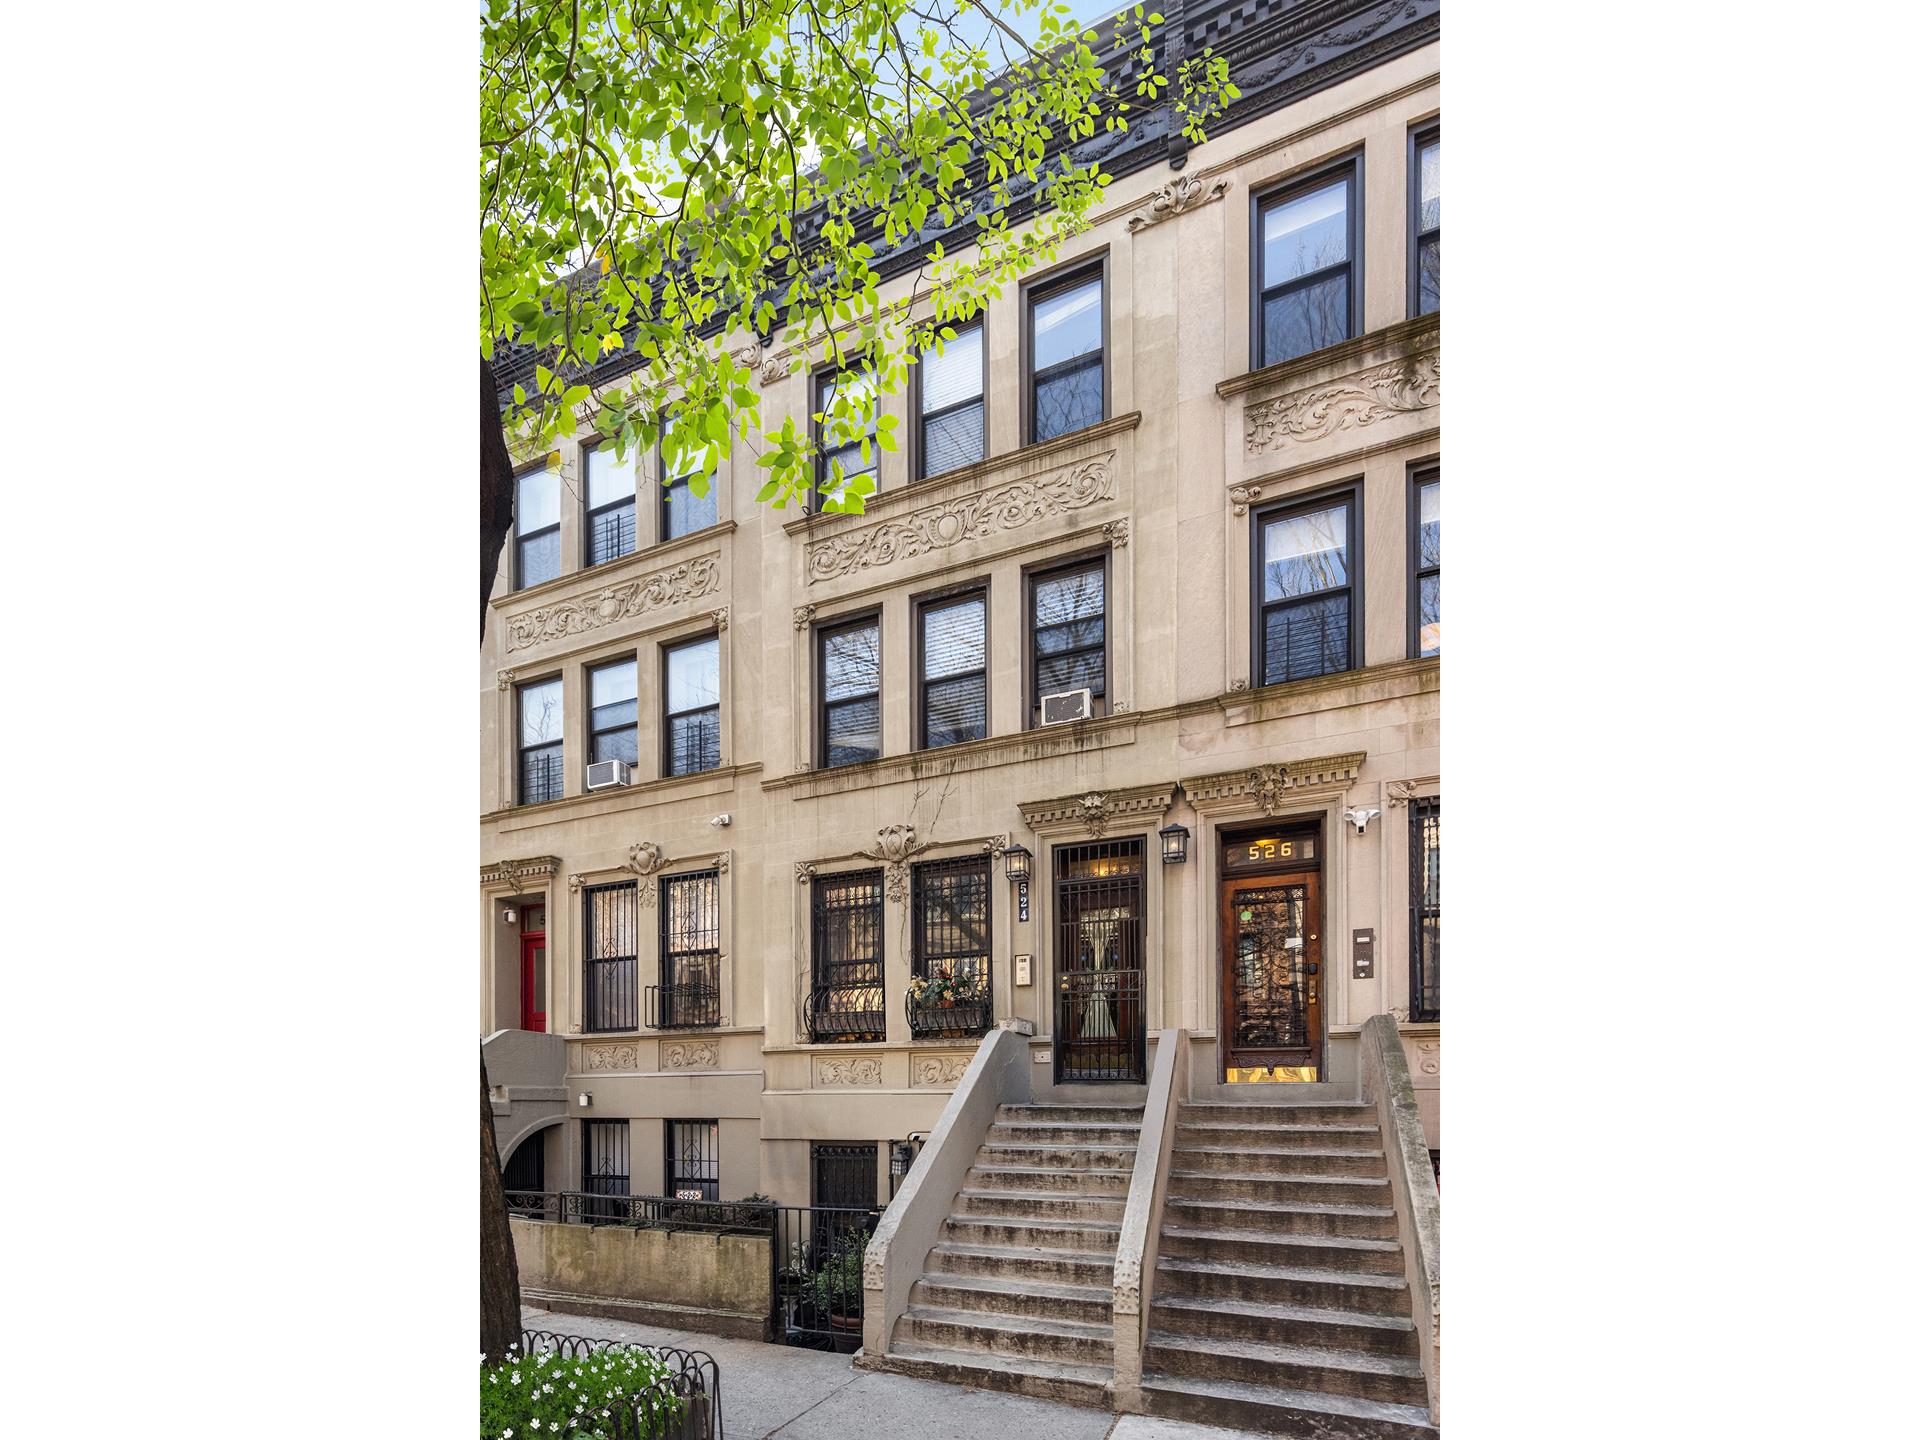 524 West 149th Street, Hamilton Heights, Upper Manhattan, NYC - 4 Bedrooms  
4 Bathrooms  
12 Rooms - 